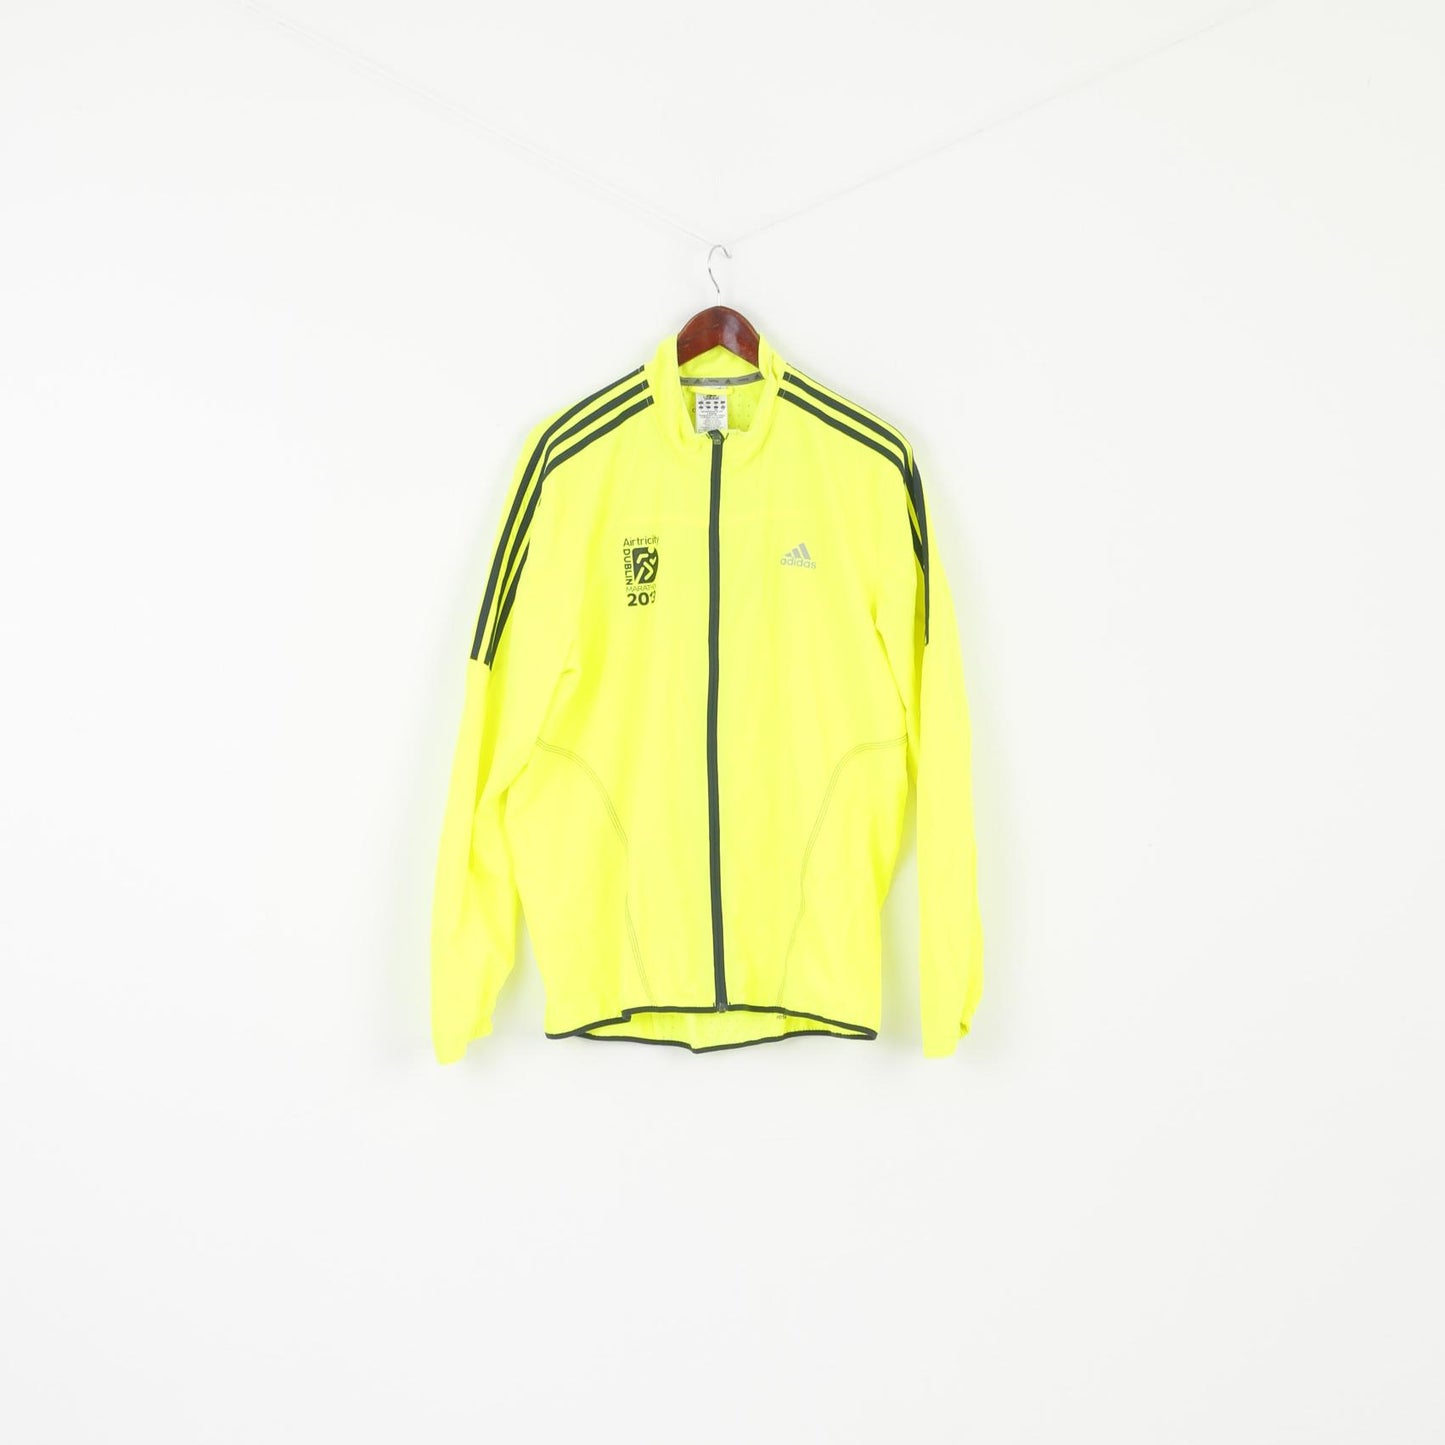 Adidas Men L Run Jacket Neon Yellow Running Dublin Marathon 2013 Climaproof Top